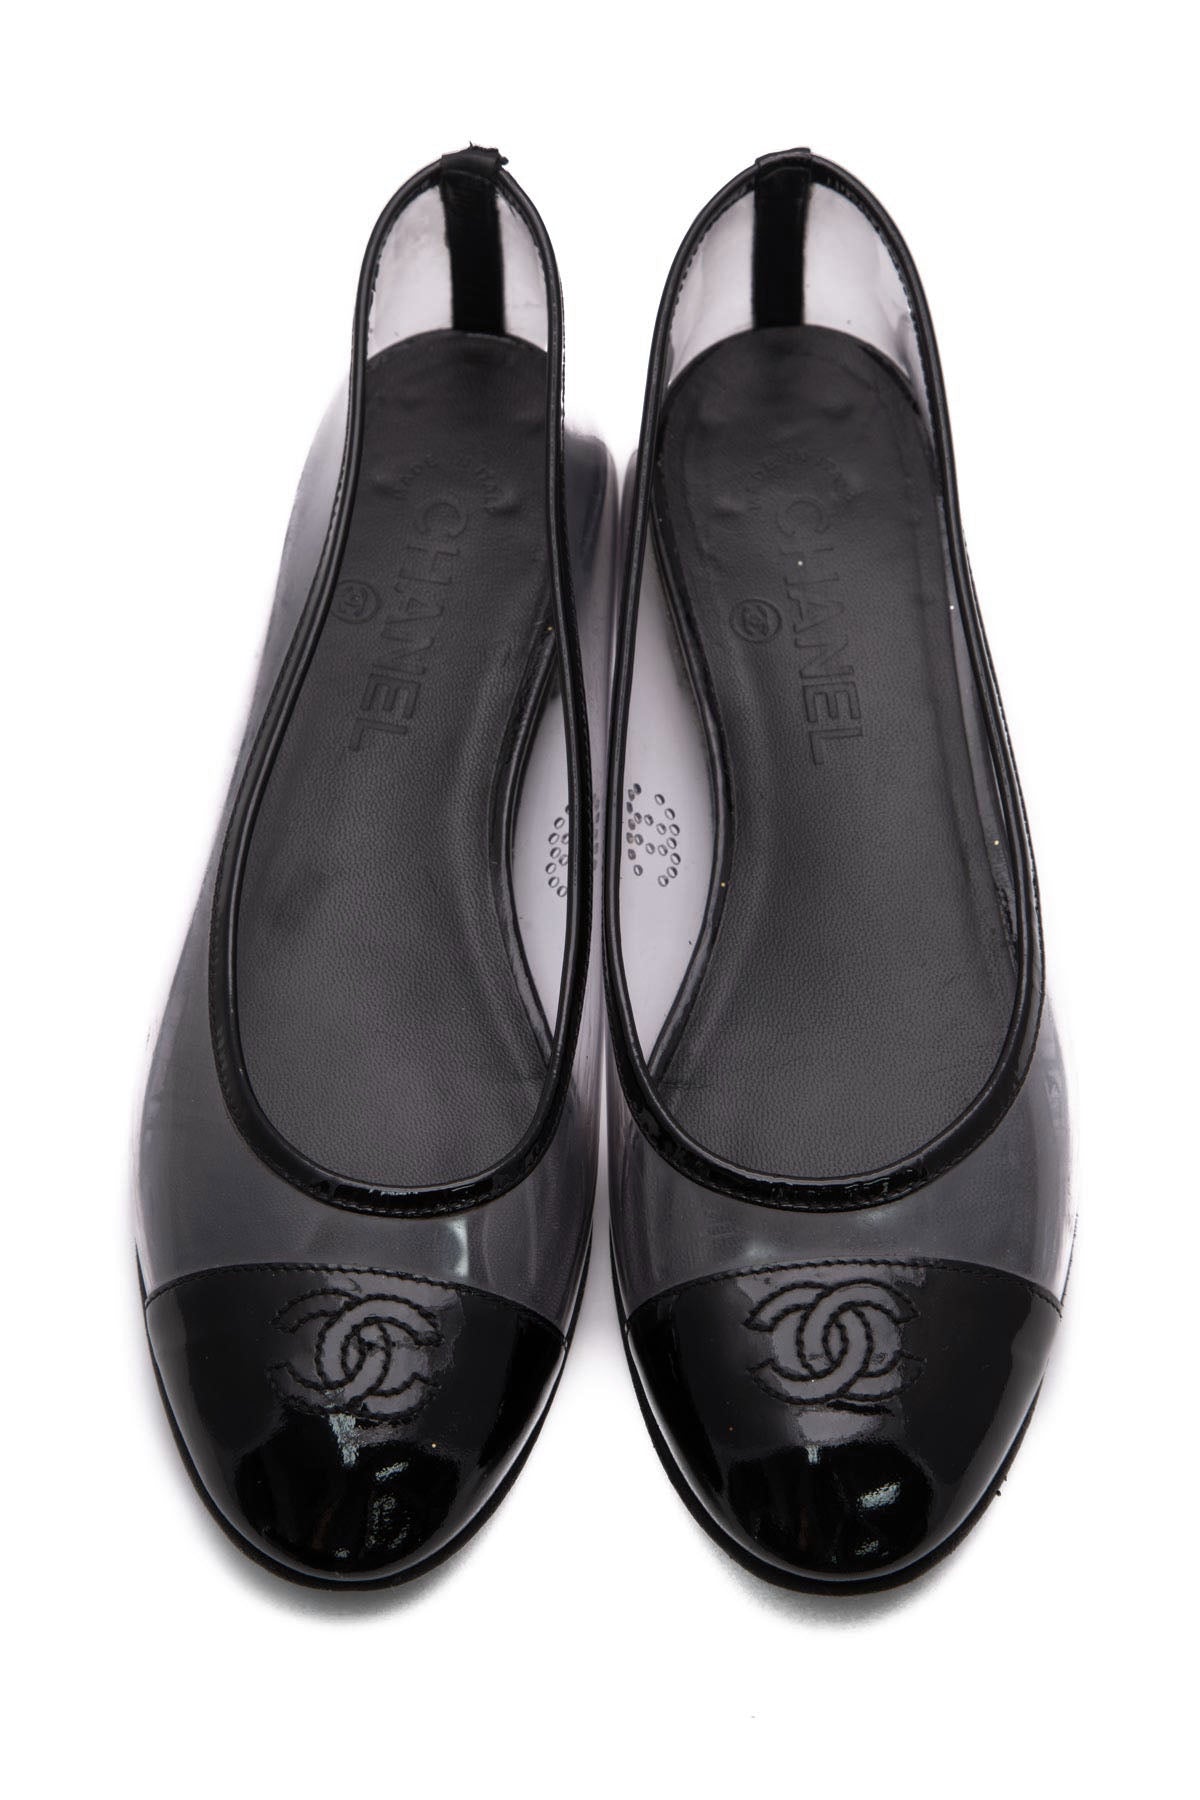 Chanel Espadrille 37 Tweed Leather Cap Toe CC Flats